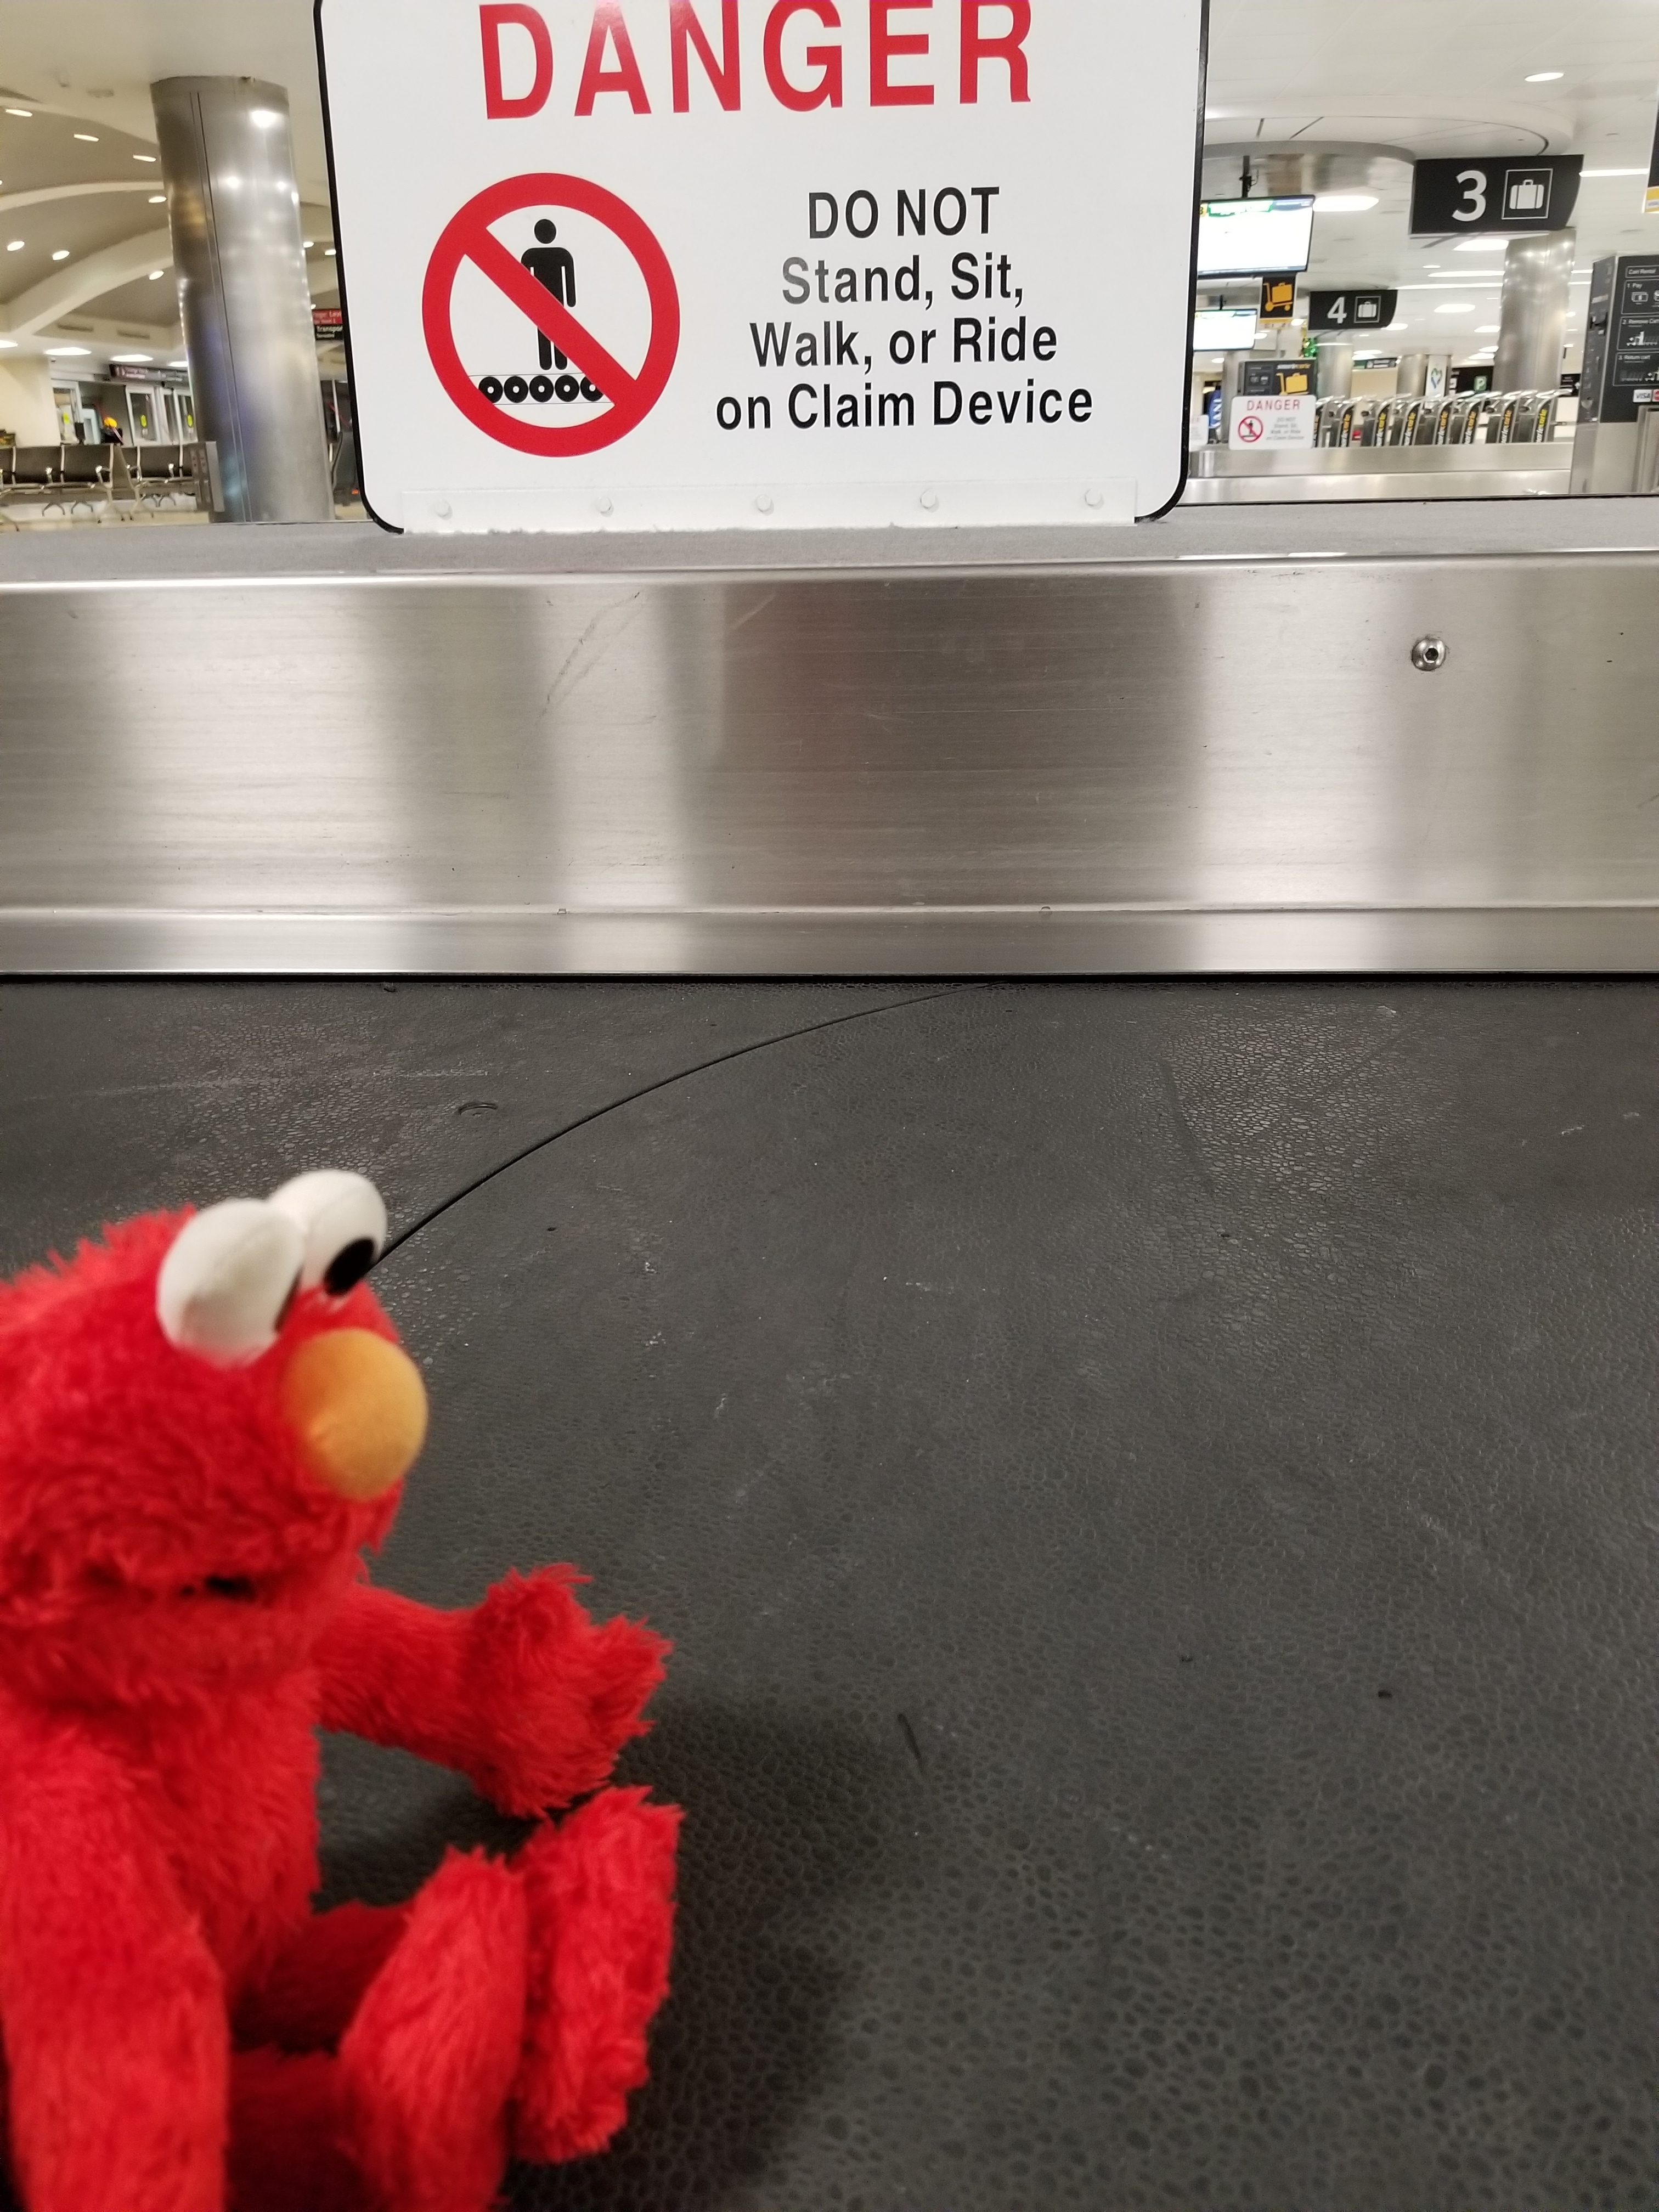 Ain't No Sign Tellin' Elmo What to do!